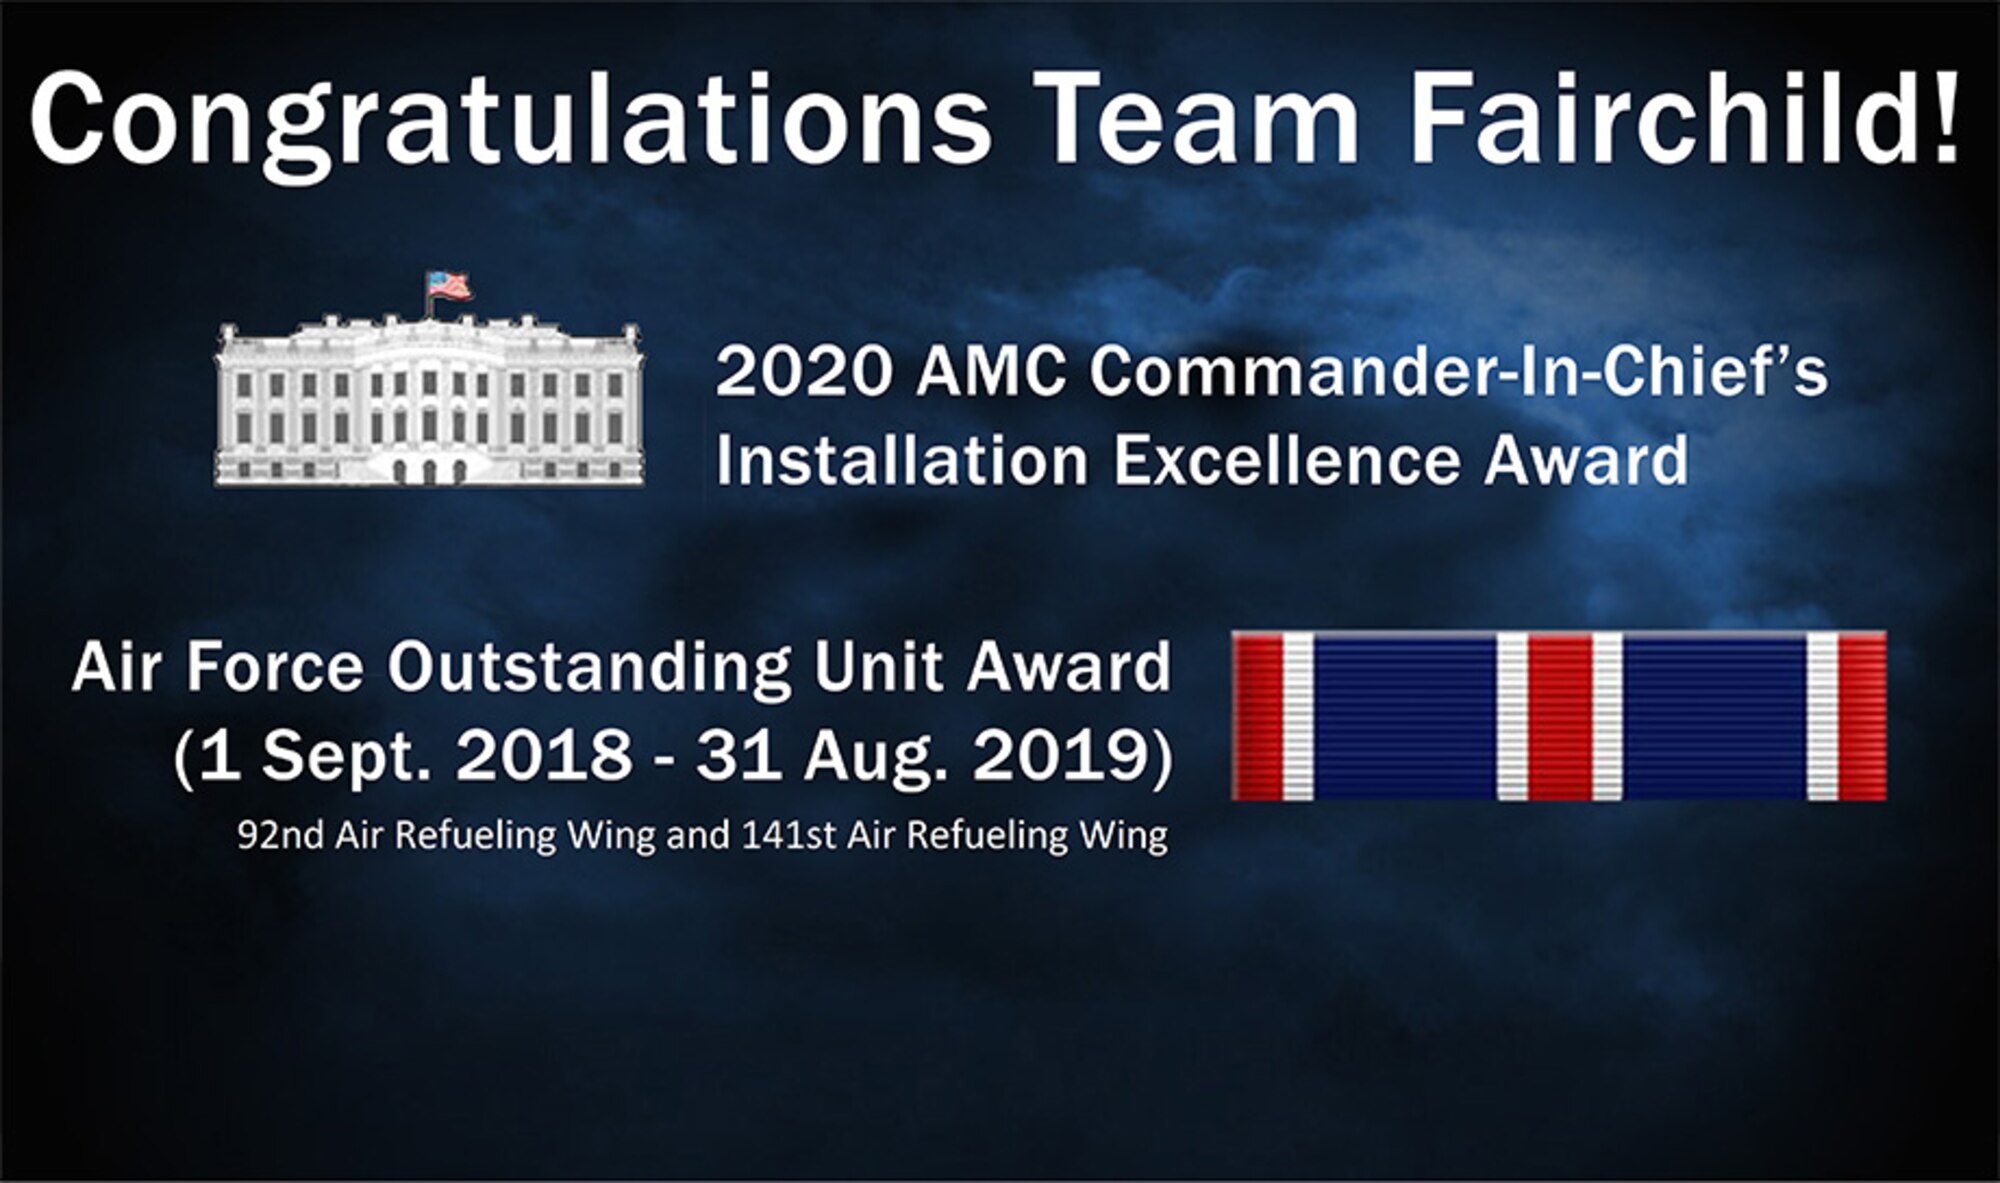 Fairchild awarded AMC nomination for 2019 CINC IEA award….earns “Honorable Mention” at Air Force level